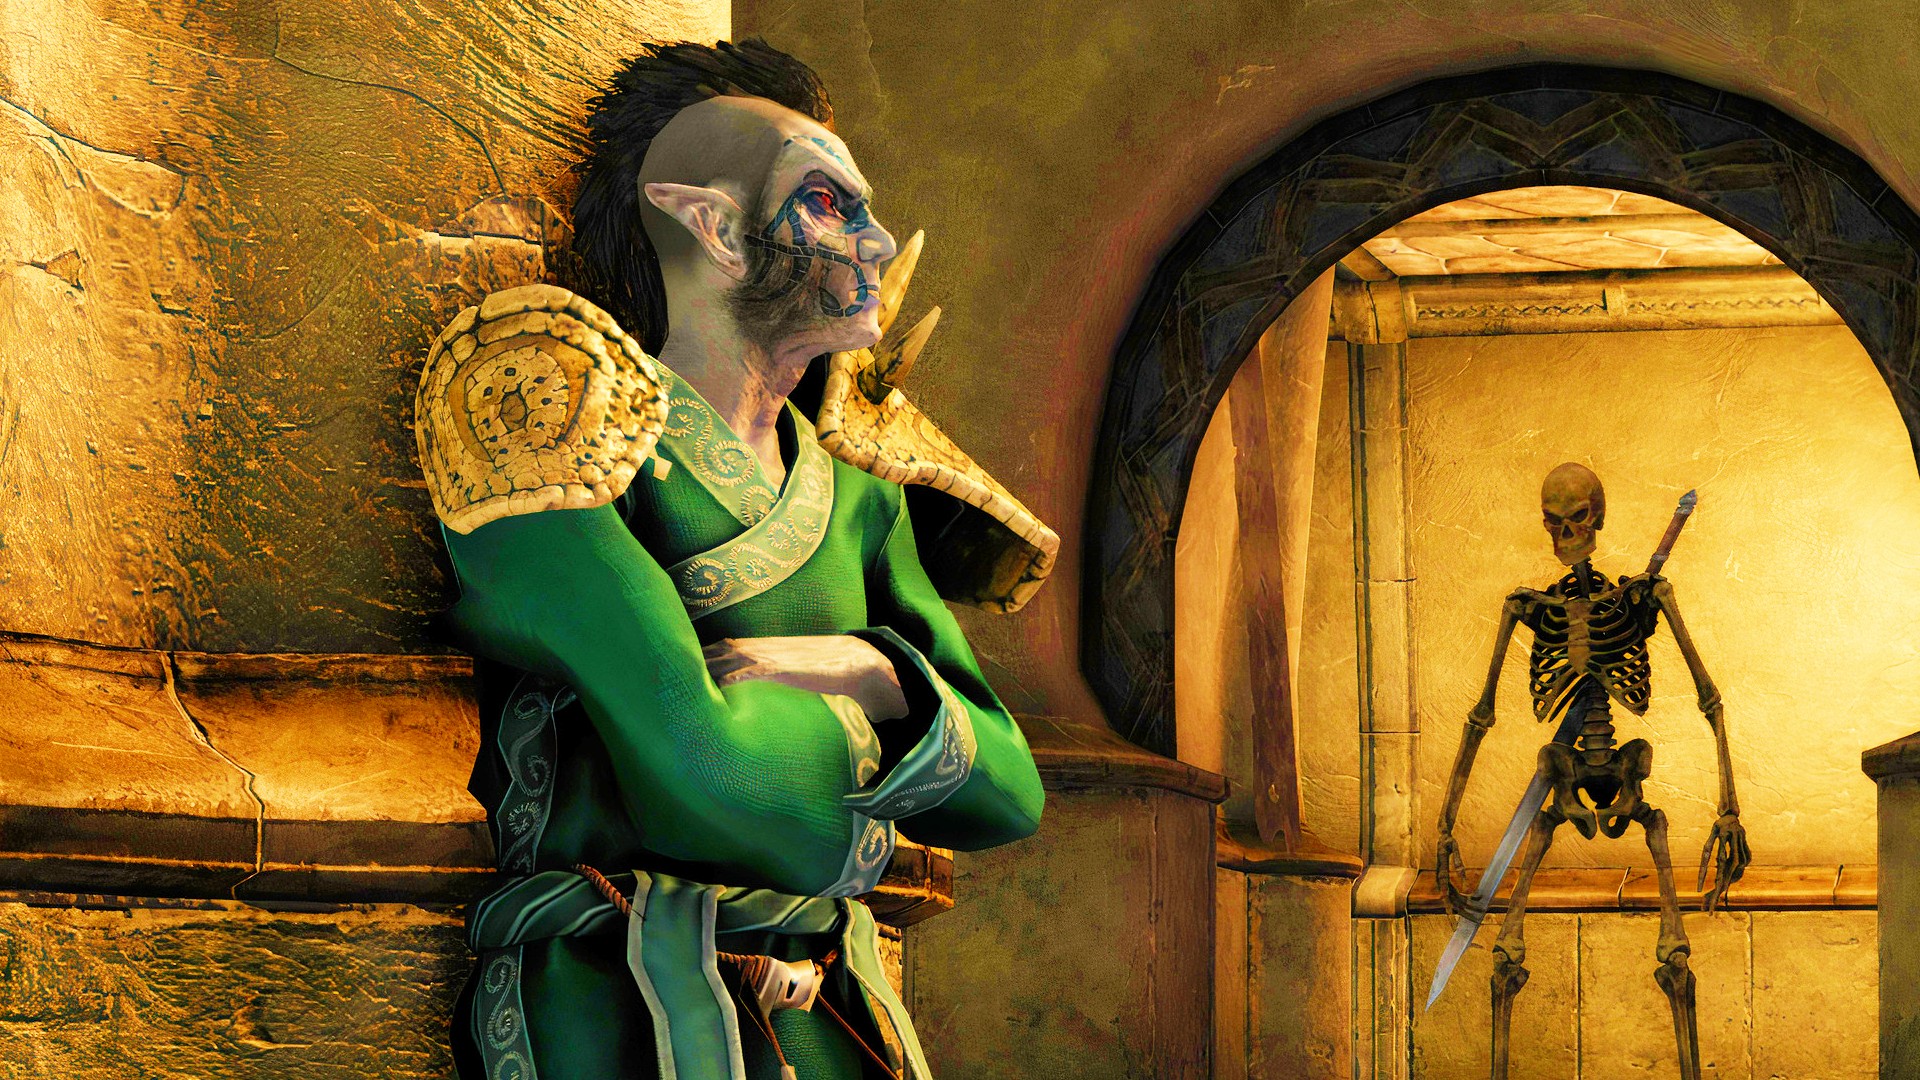 Morrowind remake, built in Skyrim, gets huge new gameplay trailer